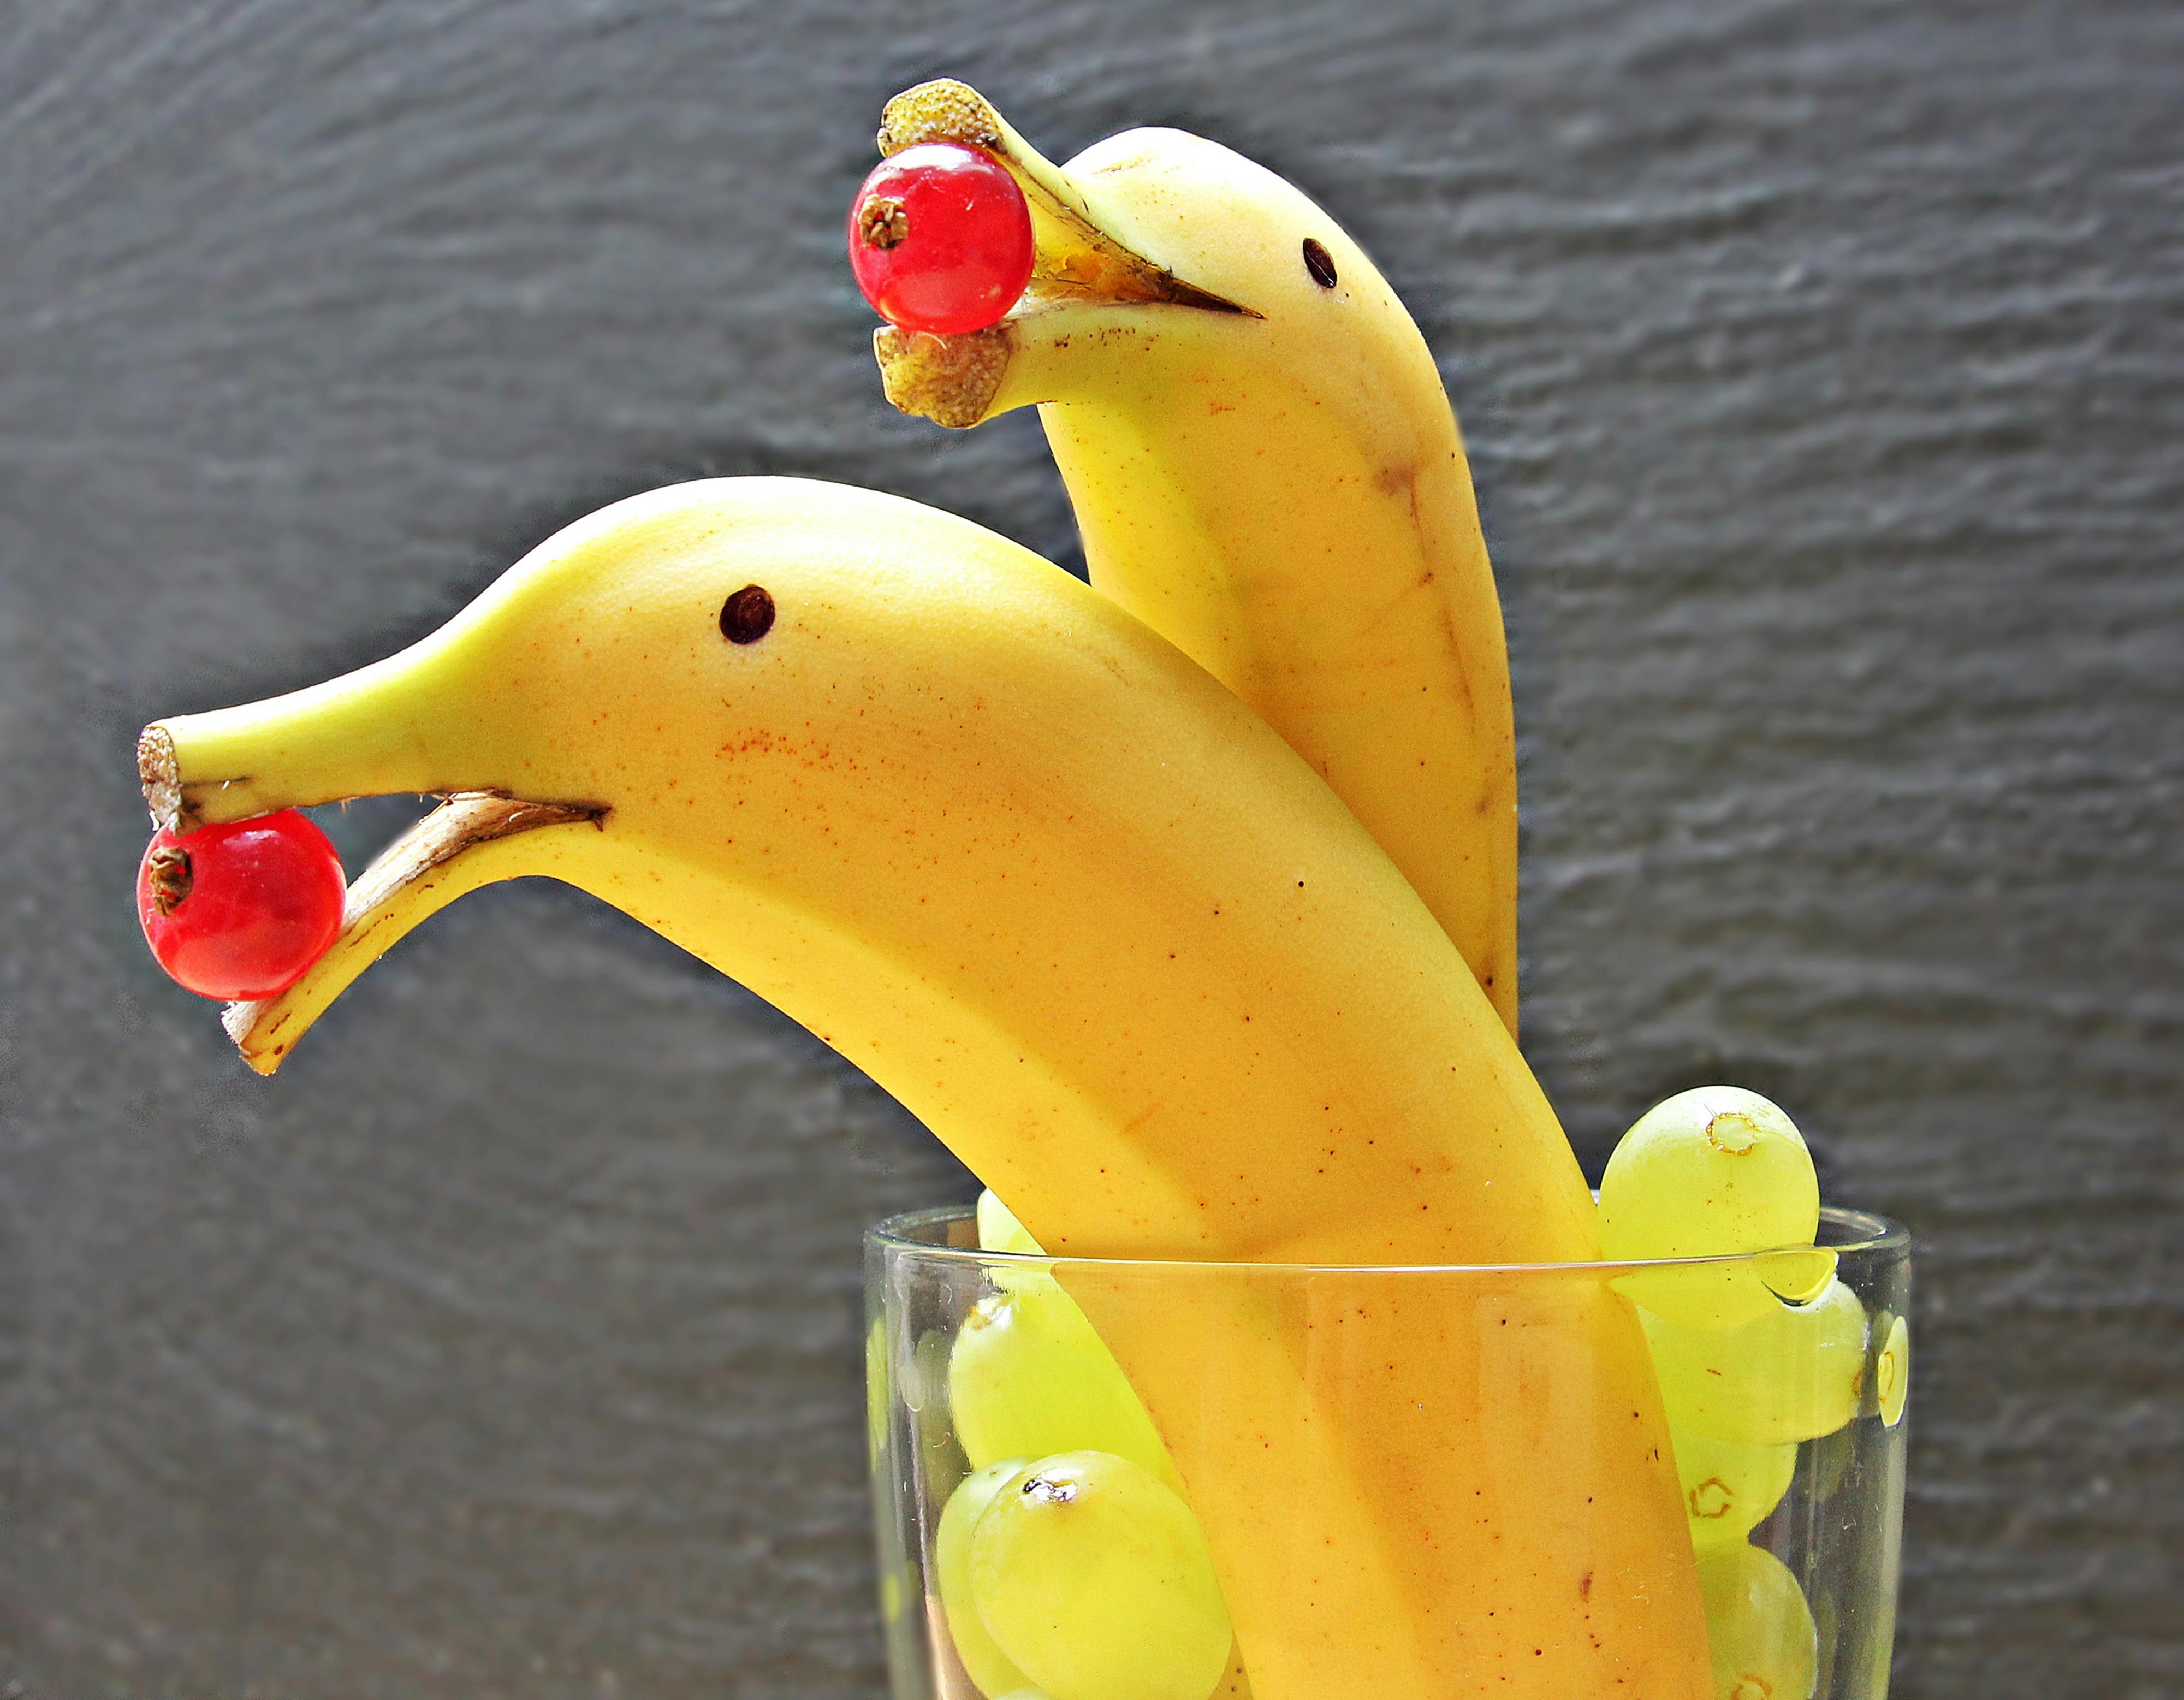 Kostenloses Foto zum Thema: appetitlich, banane delphin, banane snack